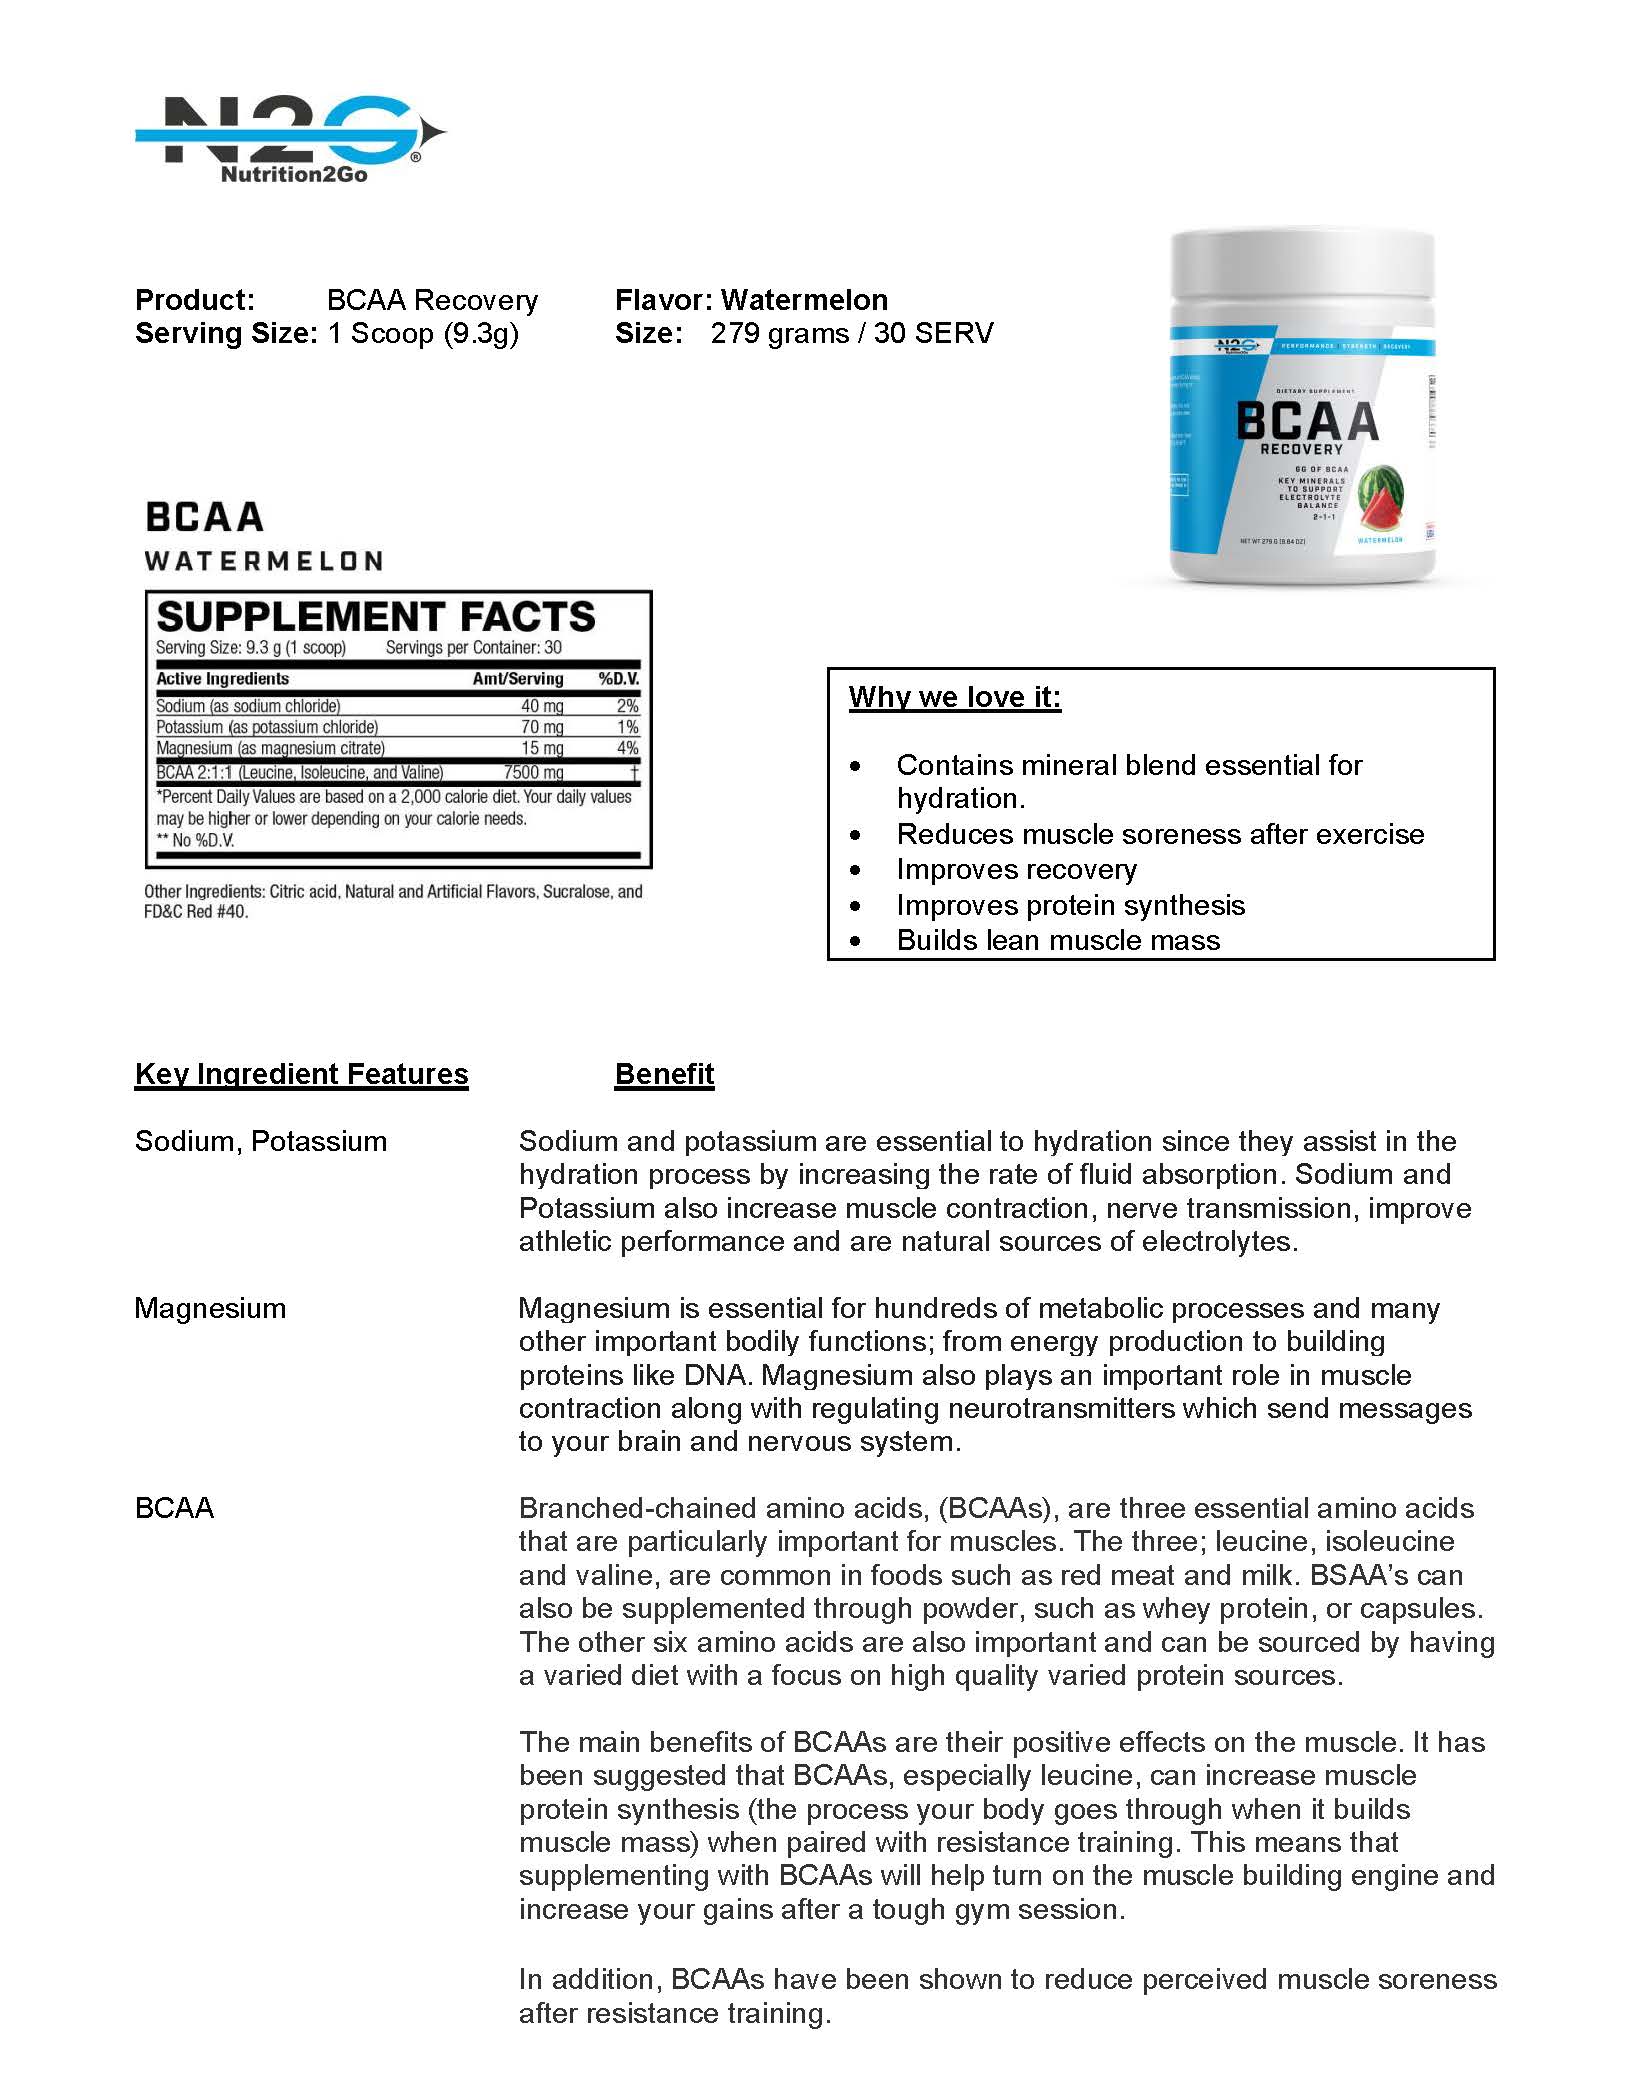 N2G Watermelon BCAA Recovery Fact Sheet